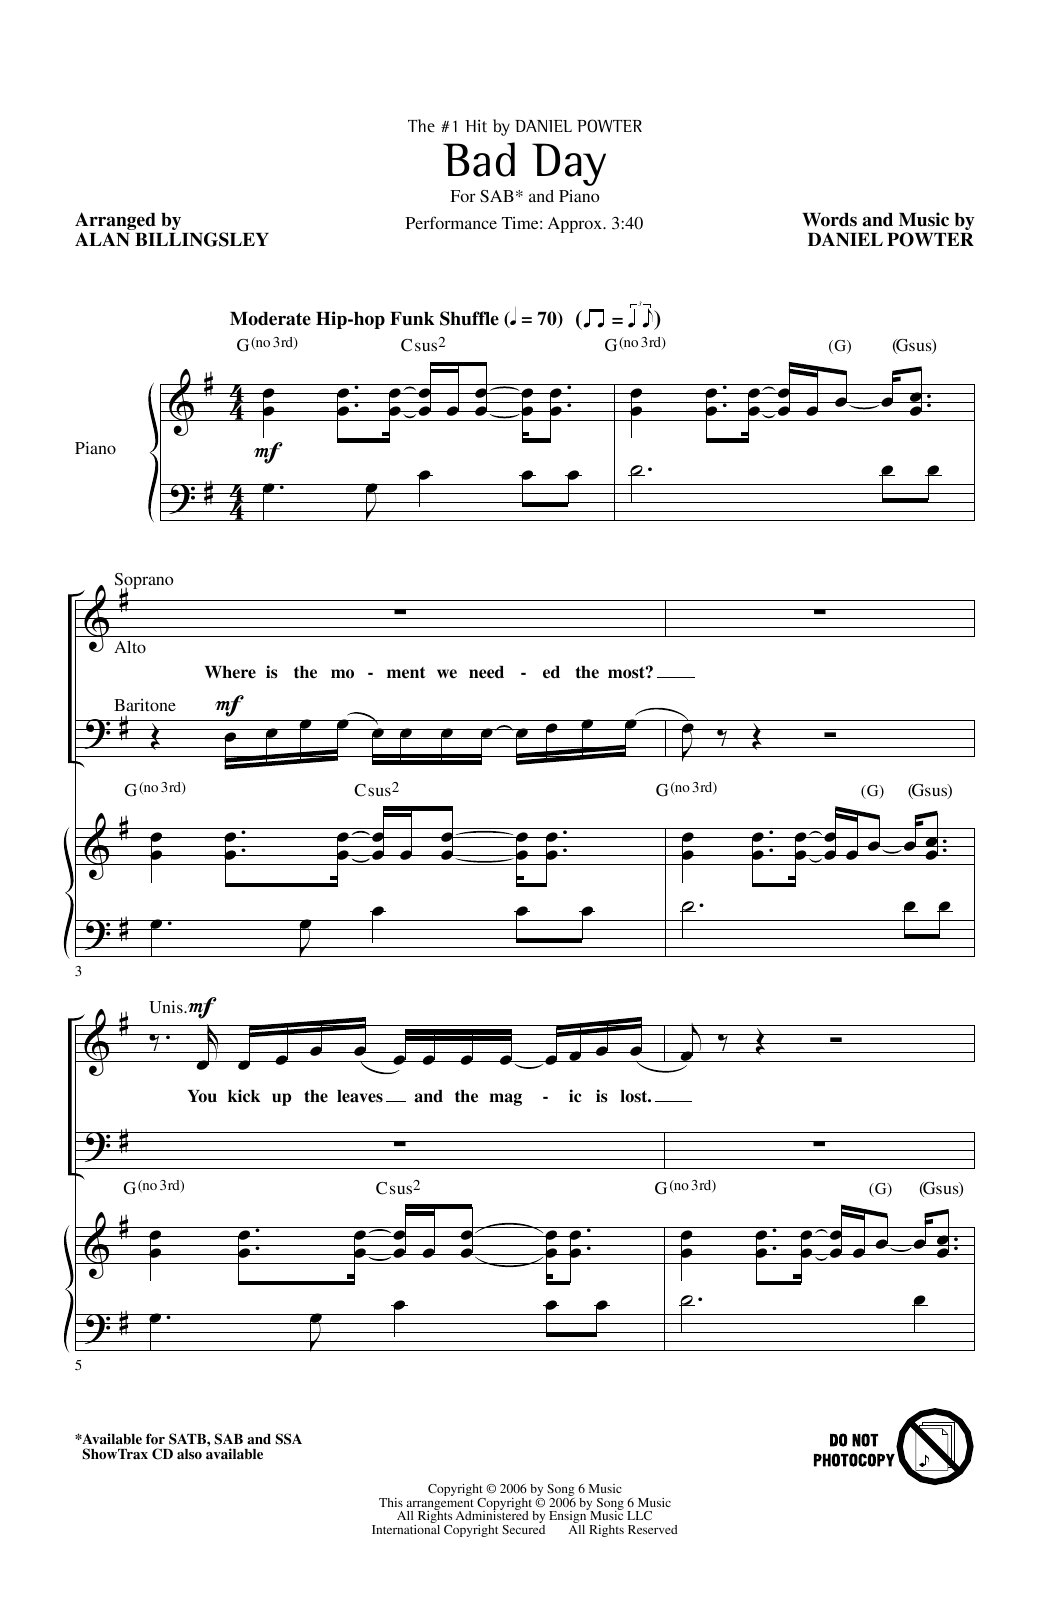 Daniel Powter Bad Day (arr. Alan Billingsley) Sheet Music Notes & Chords for SATB Choir - Download or Print PDF